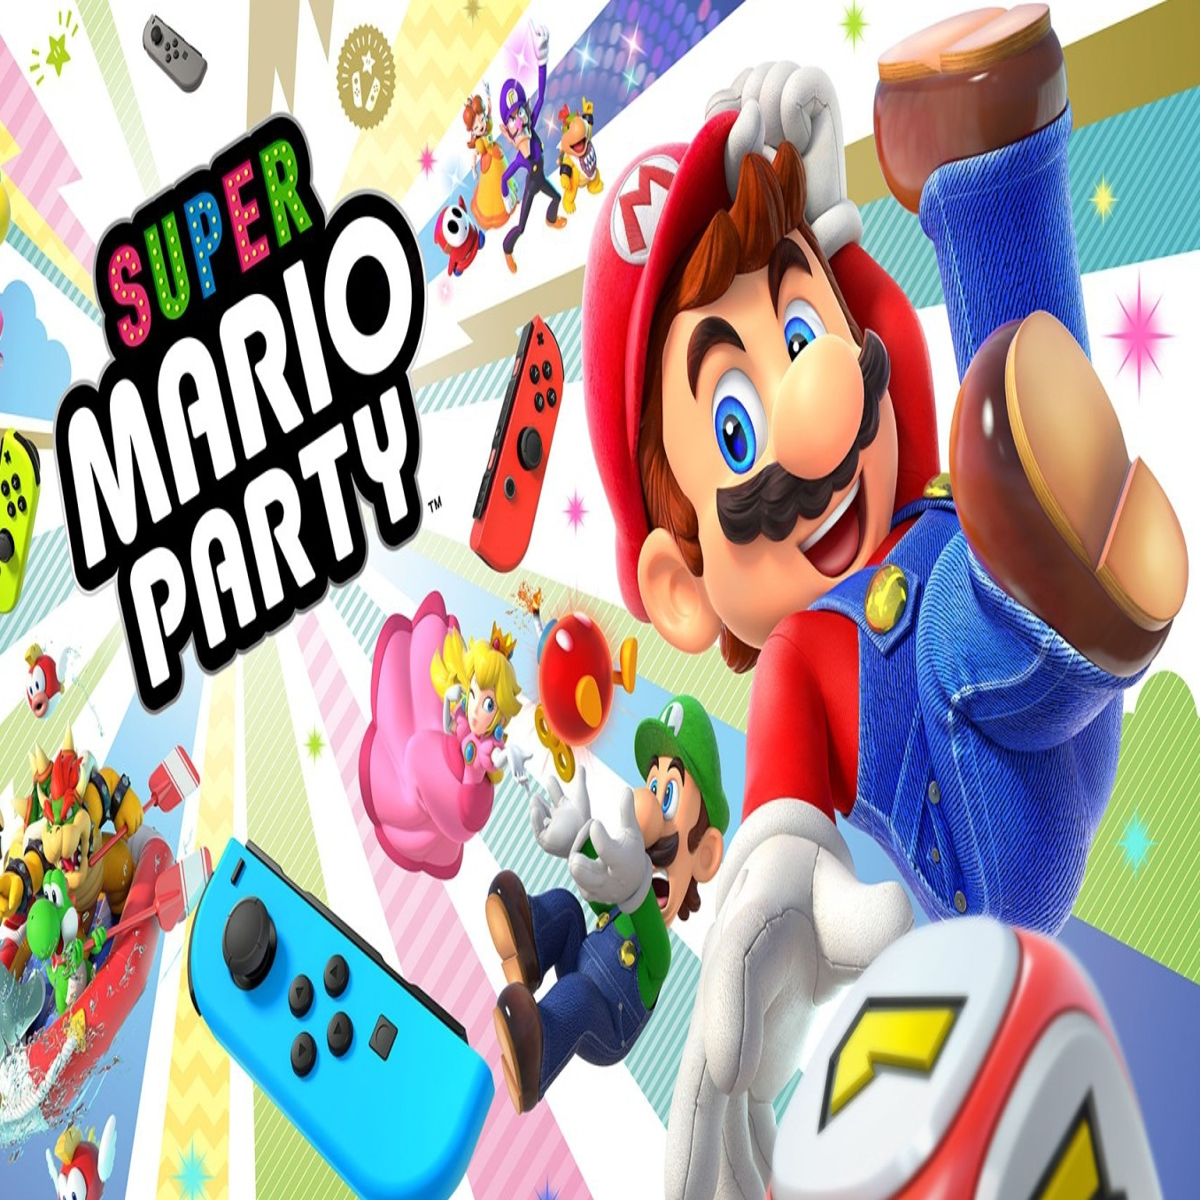 Super Mario Party - [Nintendo Switch]